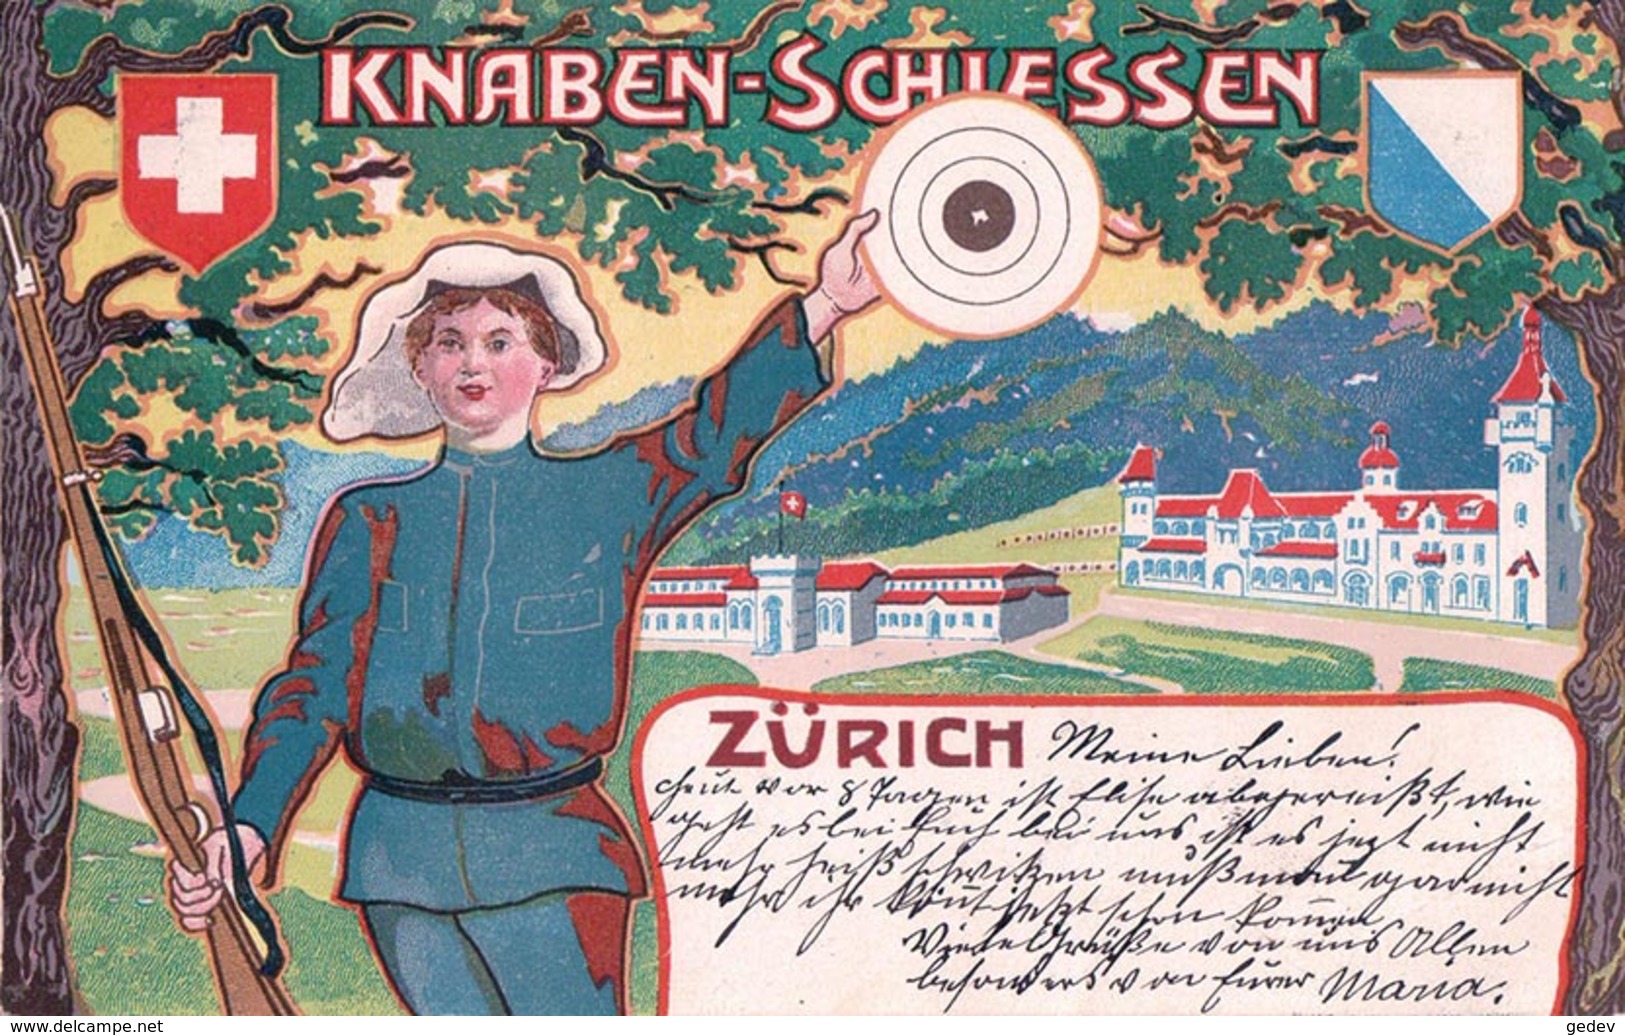 Zürich, Knaben-Schiessen, Litho (21.9.1903) - Zürich